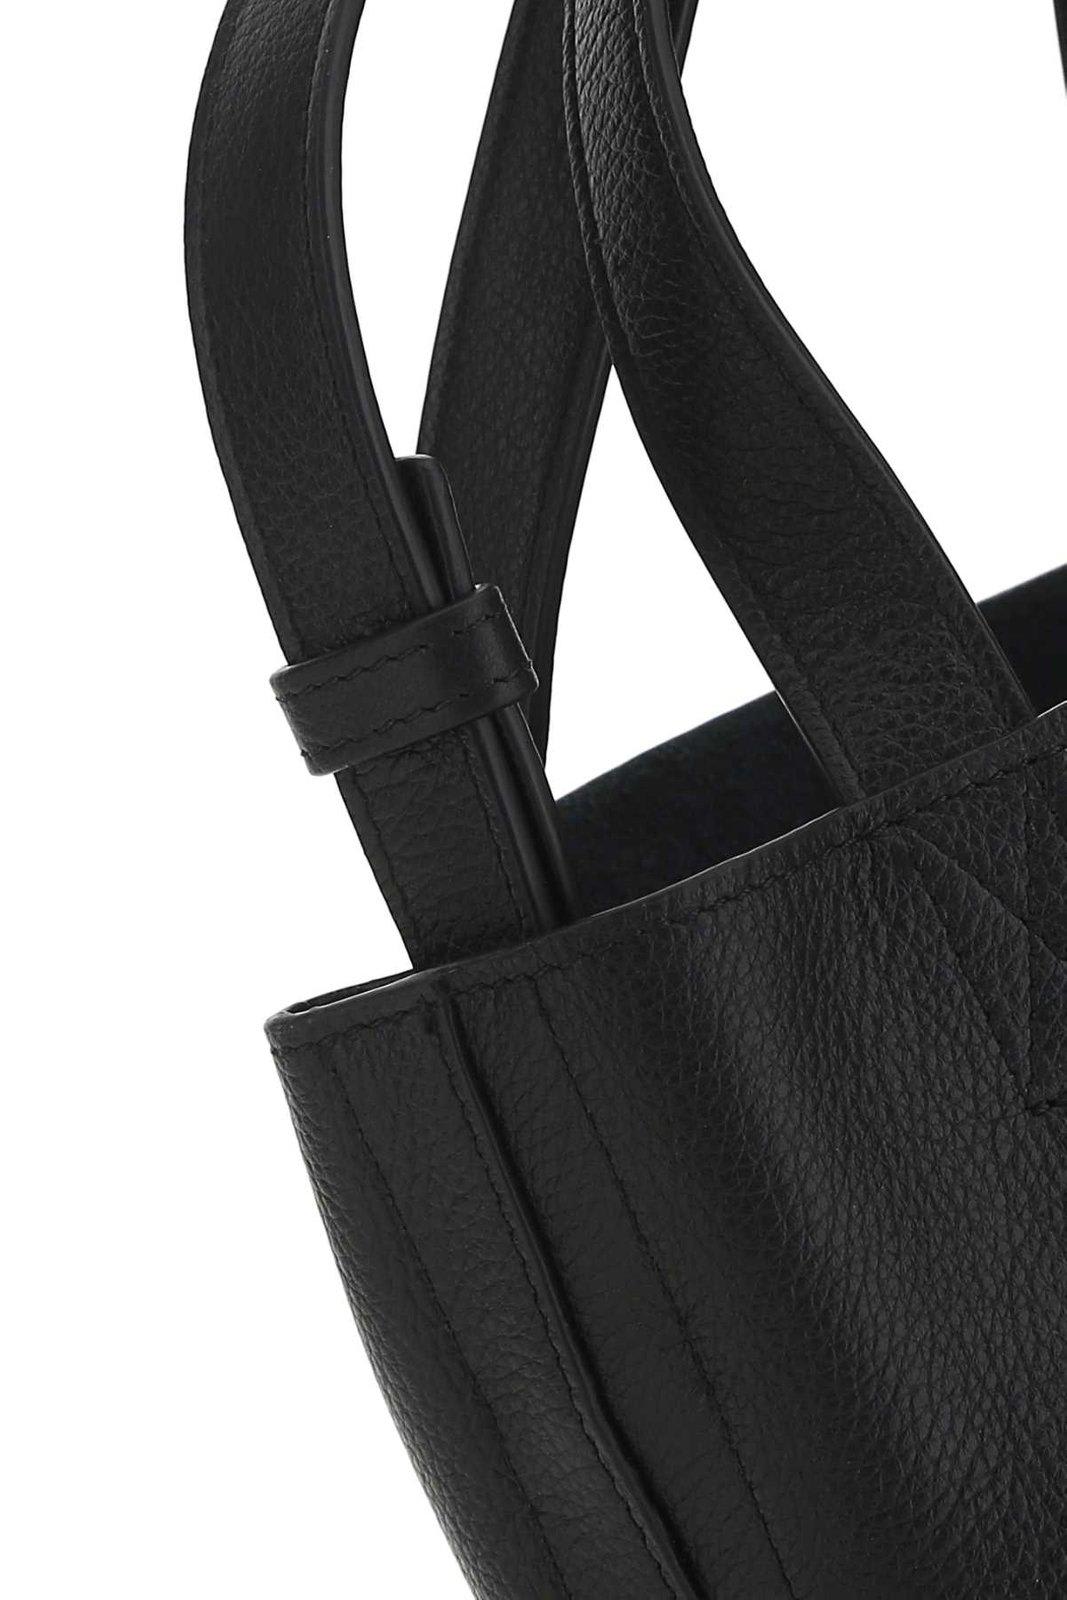 Shop Apc Cabas Maiko Tote Bag In Lzz Black